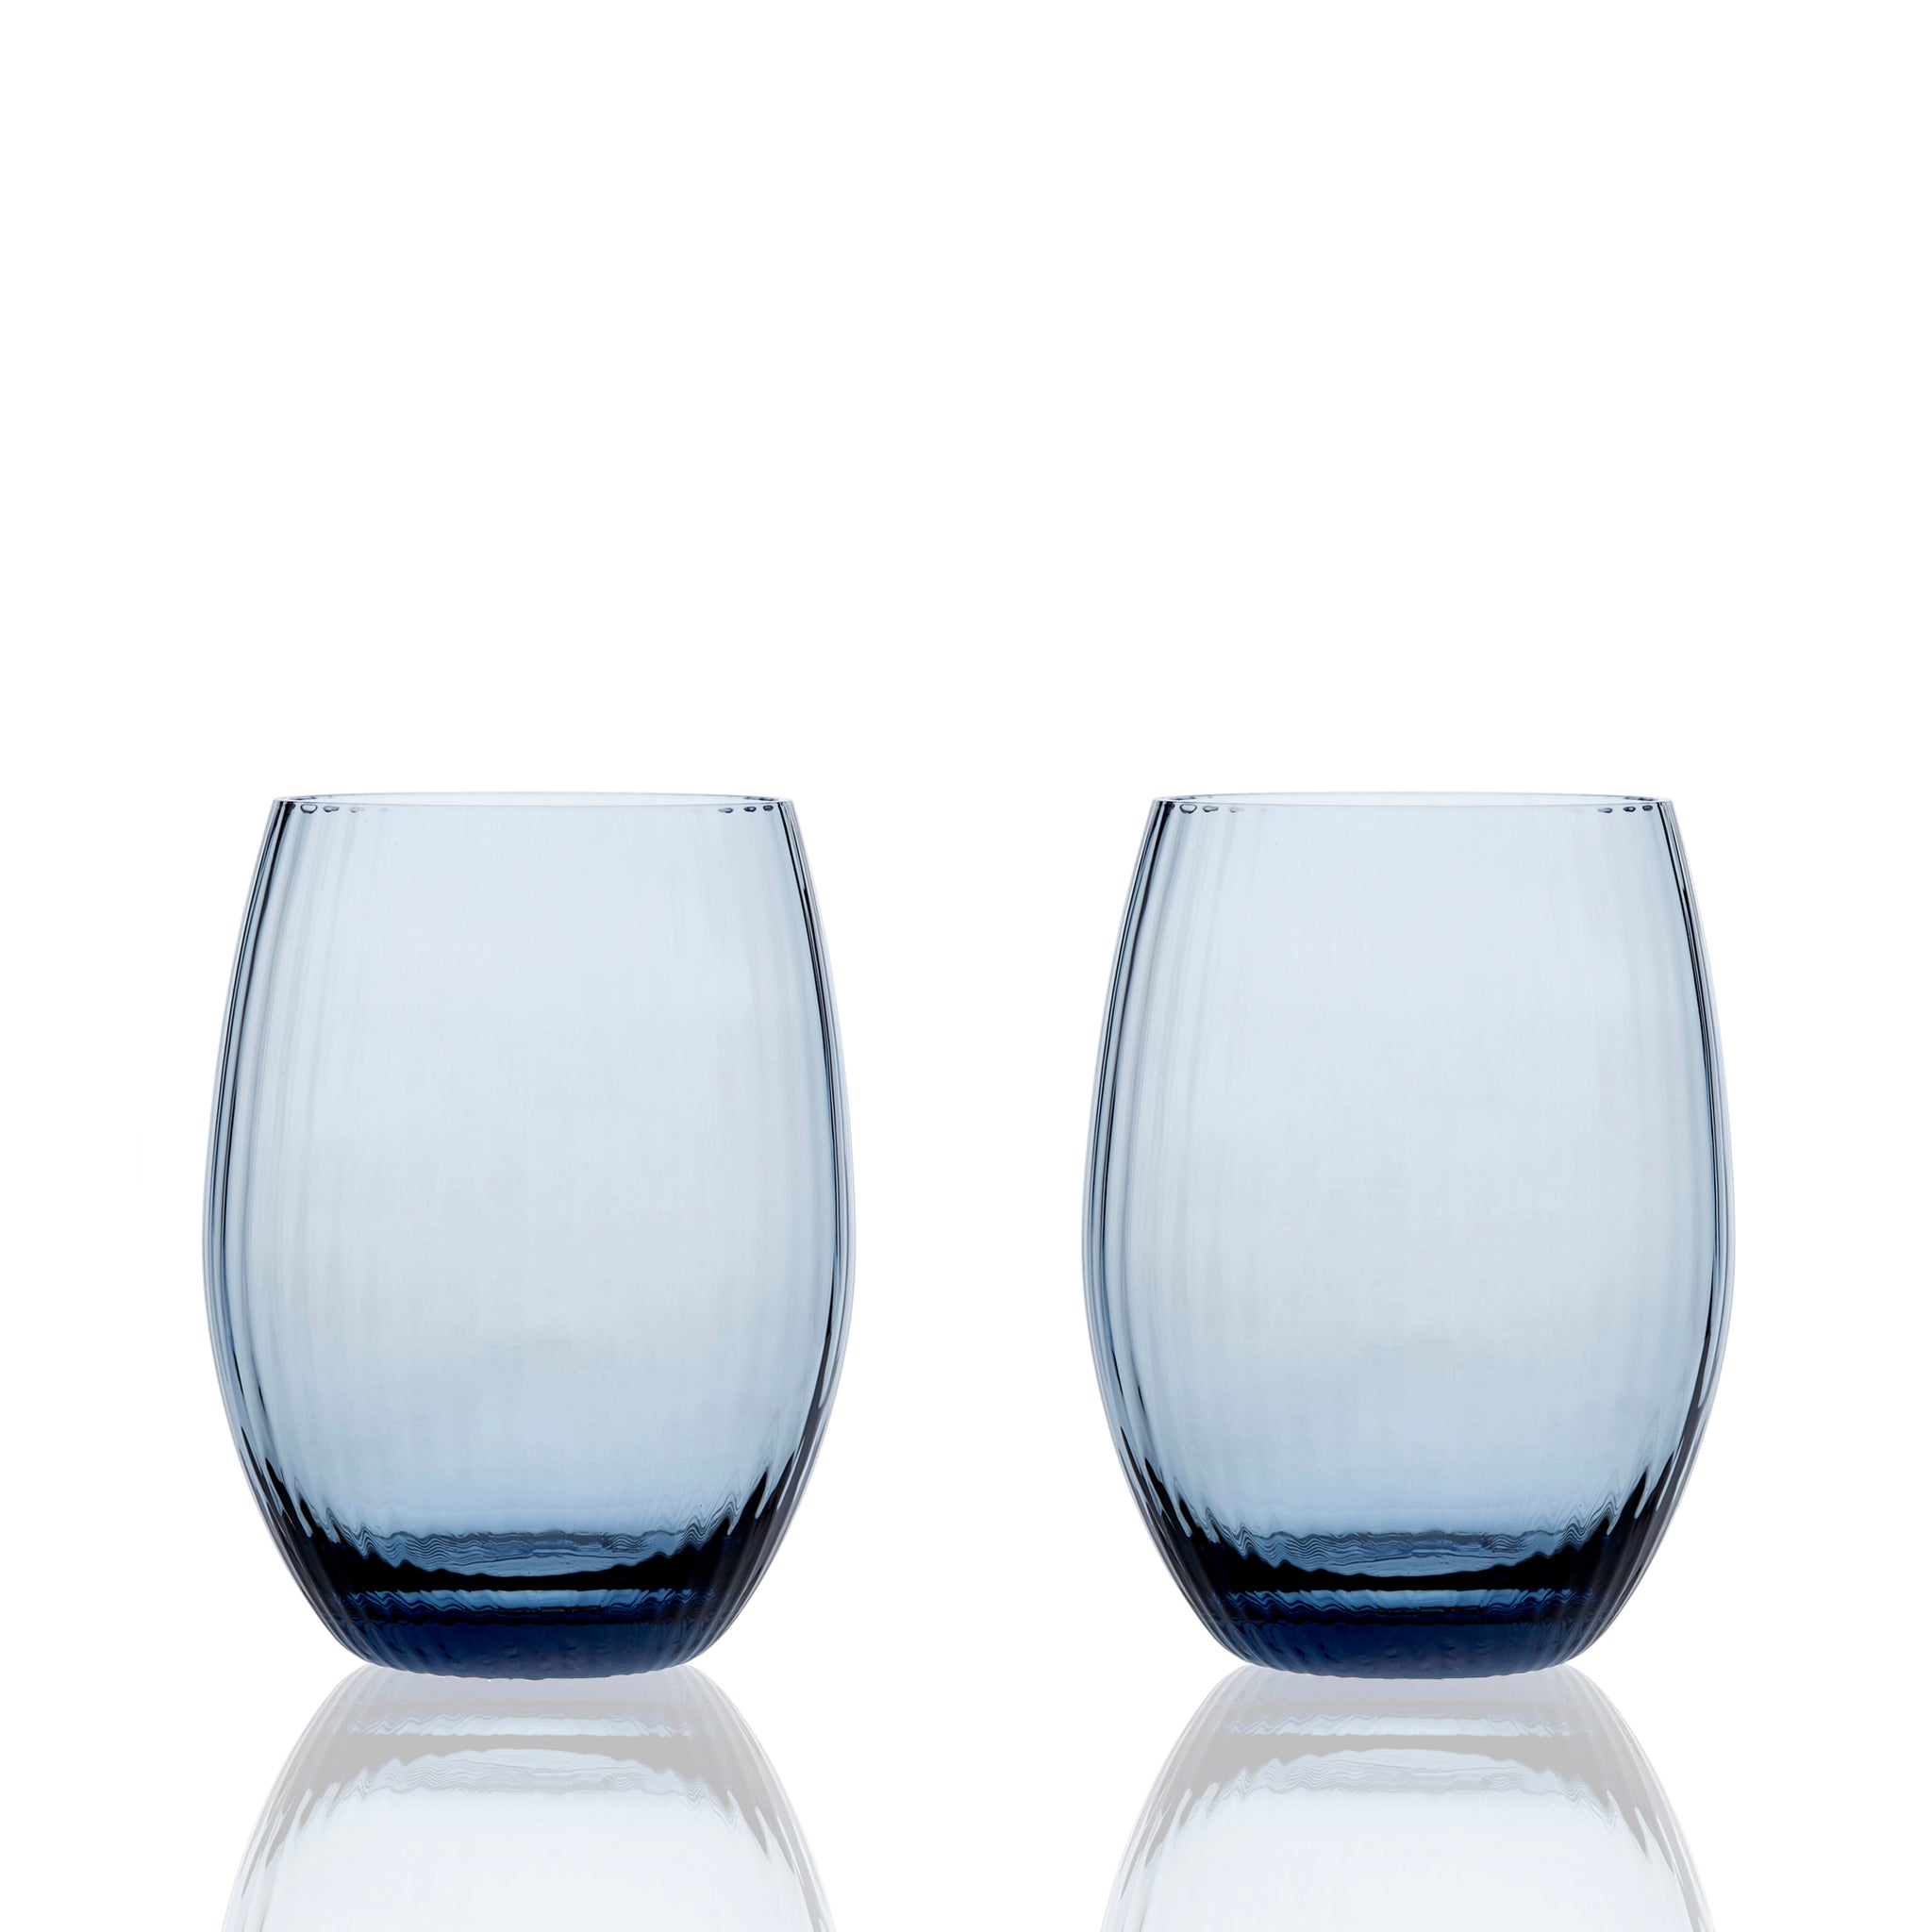 Set 4 Ocean Drinking Glass Tumblers 16 Oz Glassware 6 